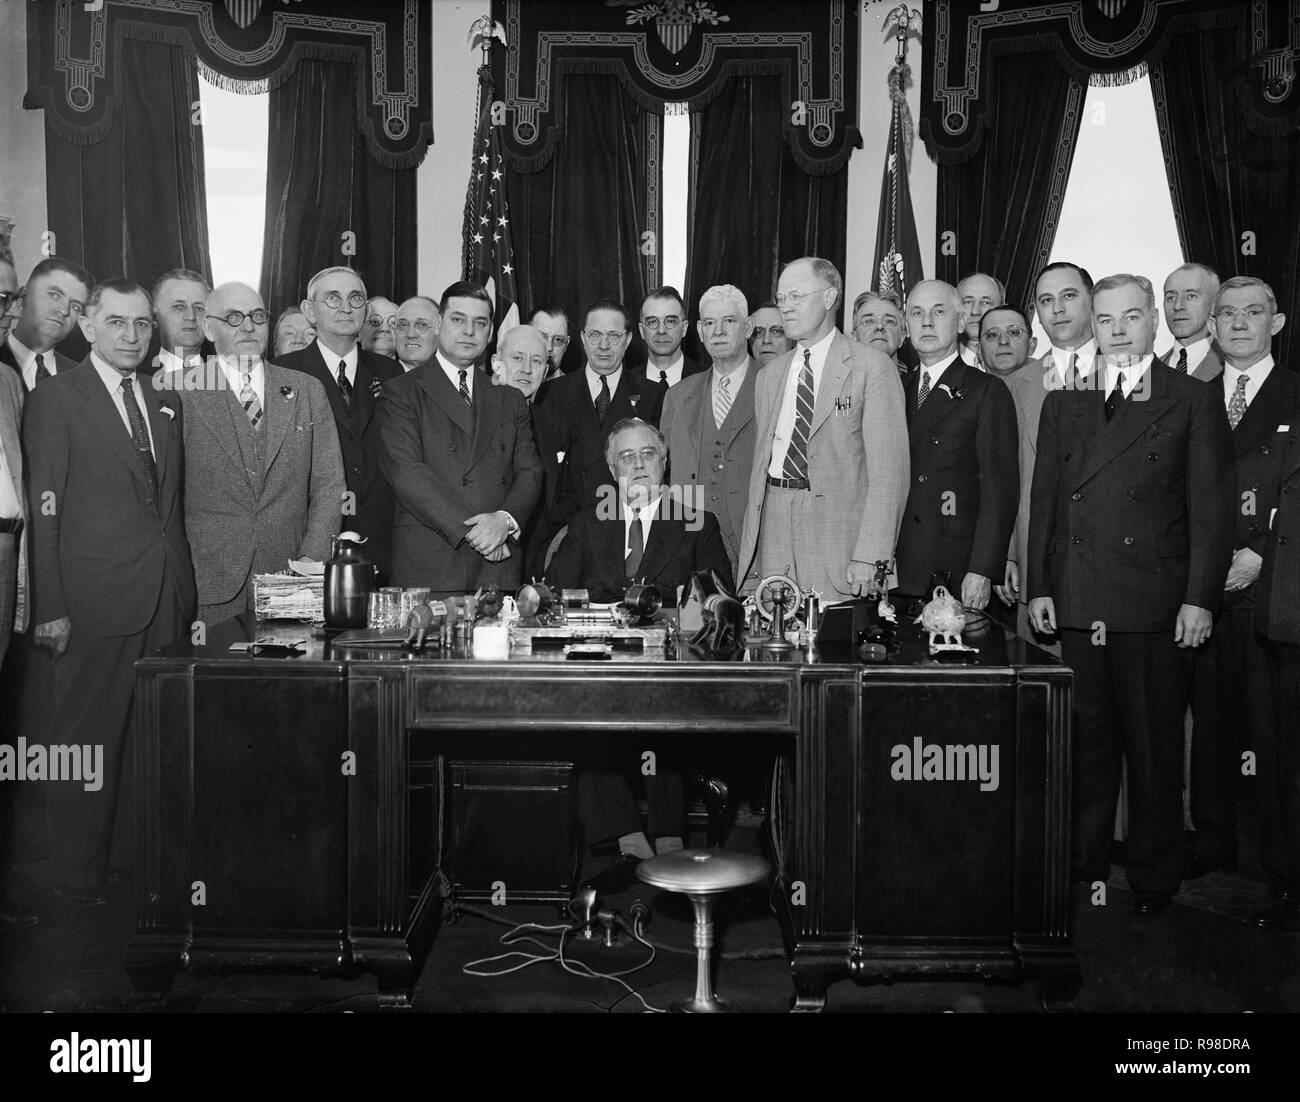 Us-Präsident Franklin Roosevelt mit Eisenbahn Beamten, Oval Office im Weißen Haus, Washington DC, USA, Harris & Ewing, 1936 Stockfoto